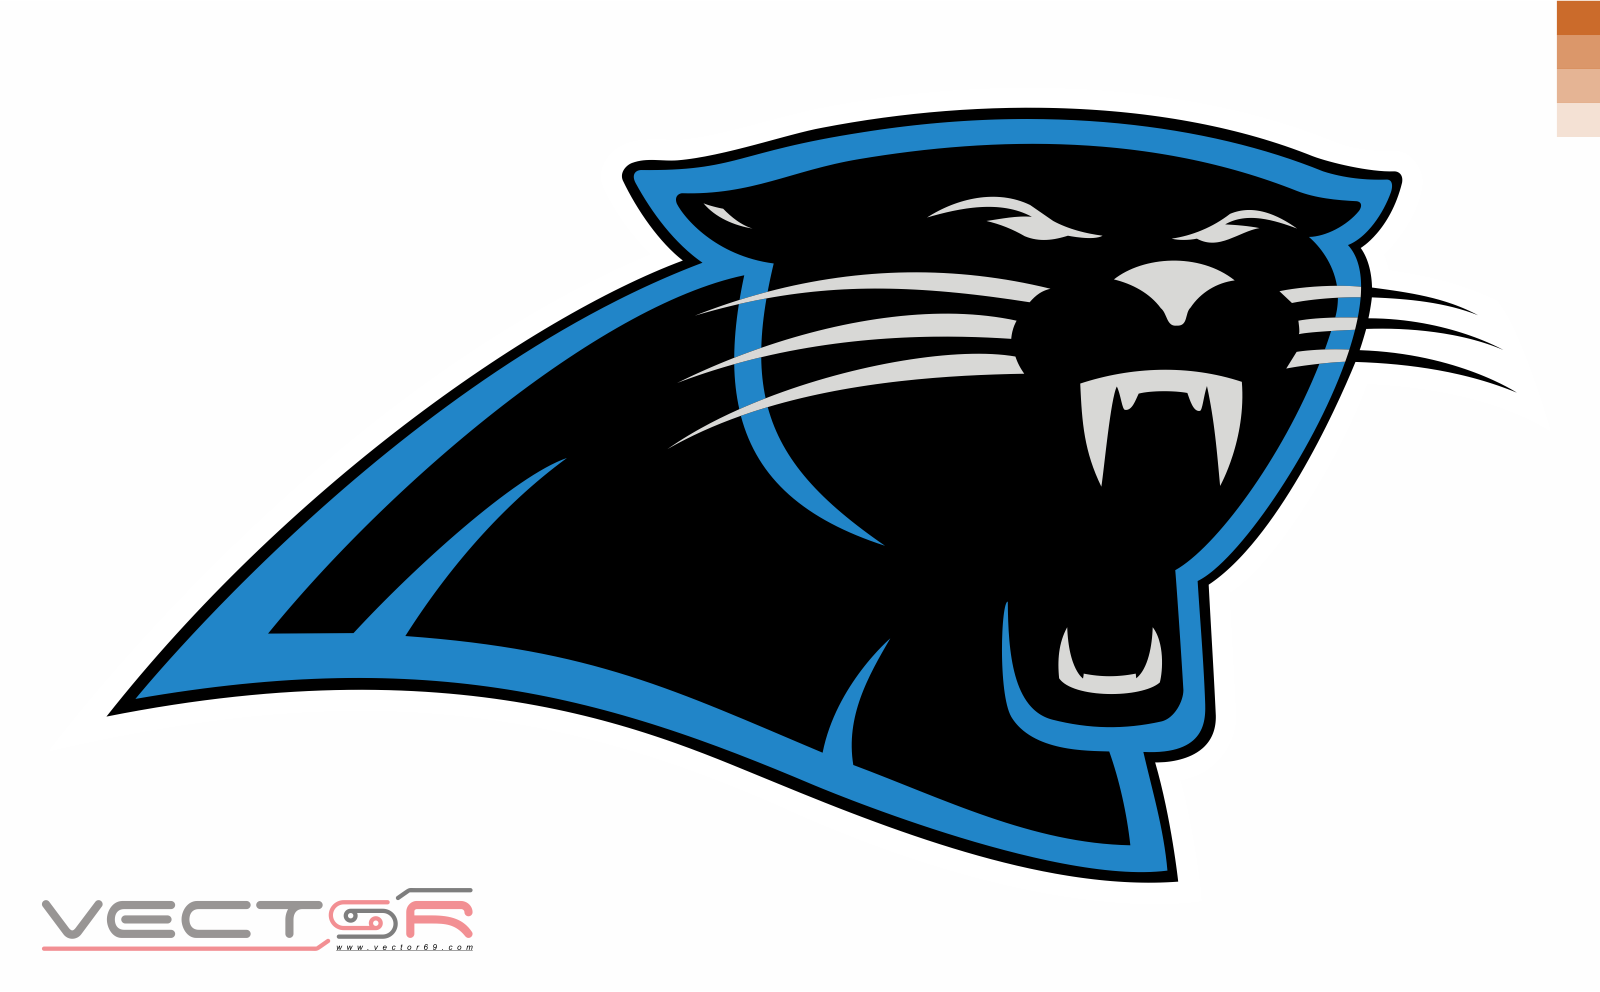 Carolina Panthers 1995-2011 Logo - Download Vector File AI (Adobe Illustrator)